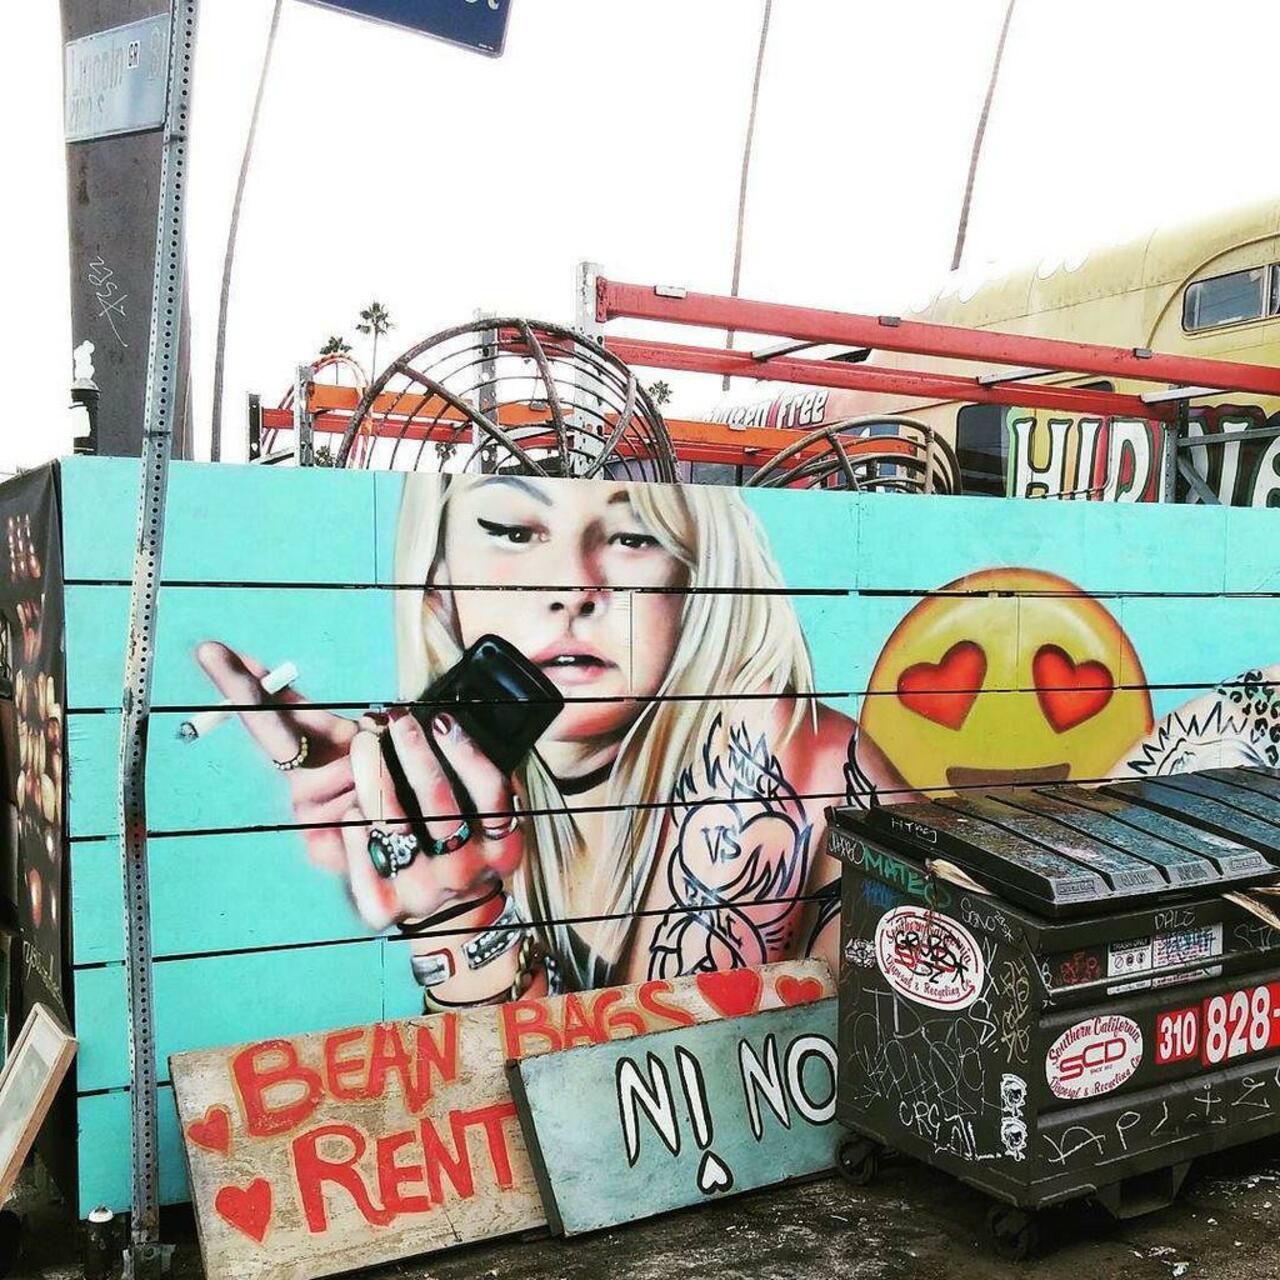 Les voisins un peu hippies... #losangeles #LA #cali #california #venice #hippies #mural #peaceandlove #graffiti #st… http://t.co/HqH6eVIrJ6